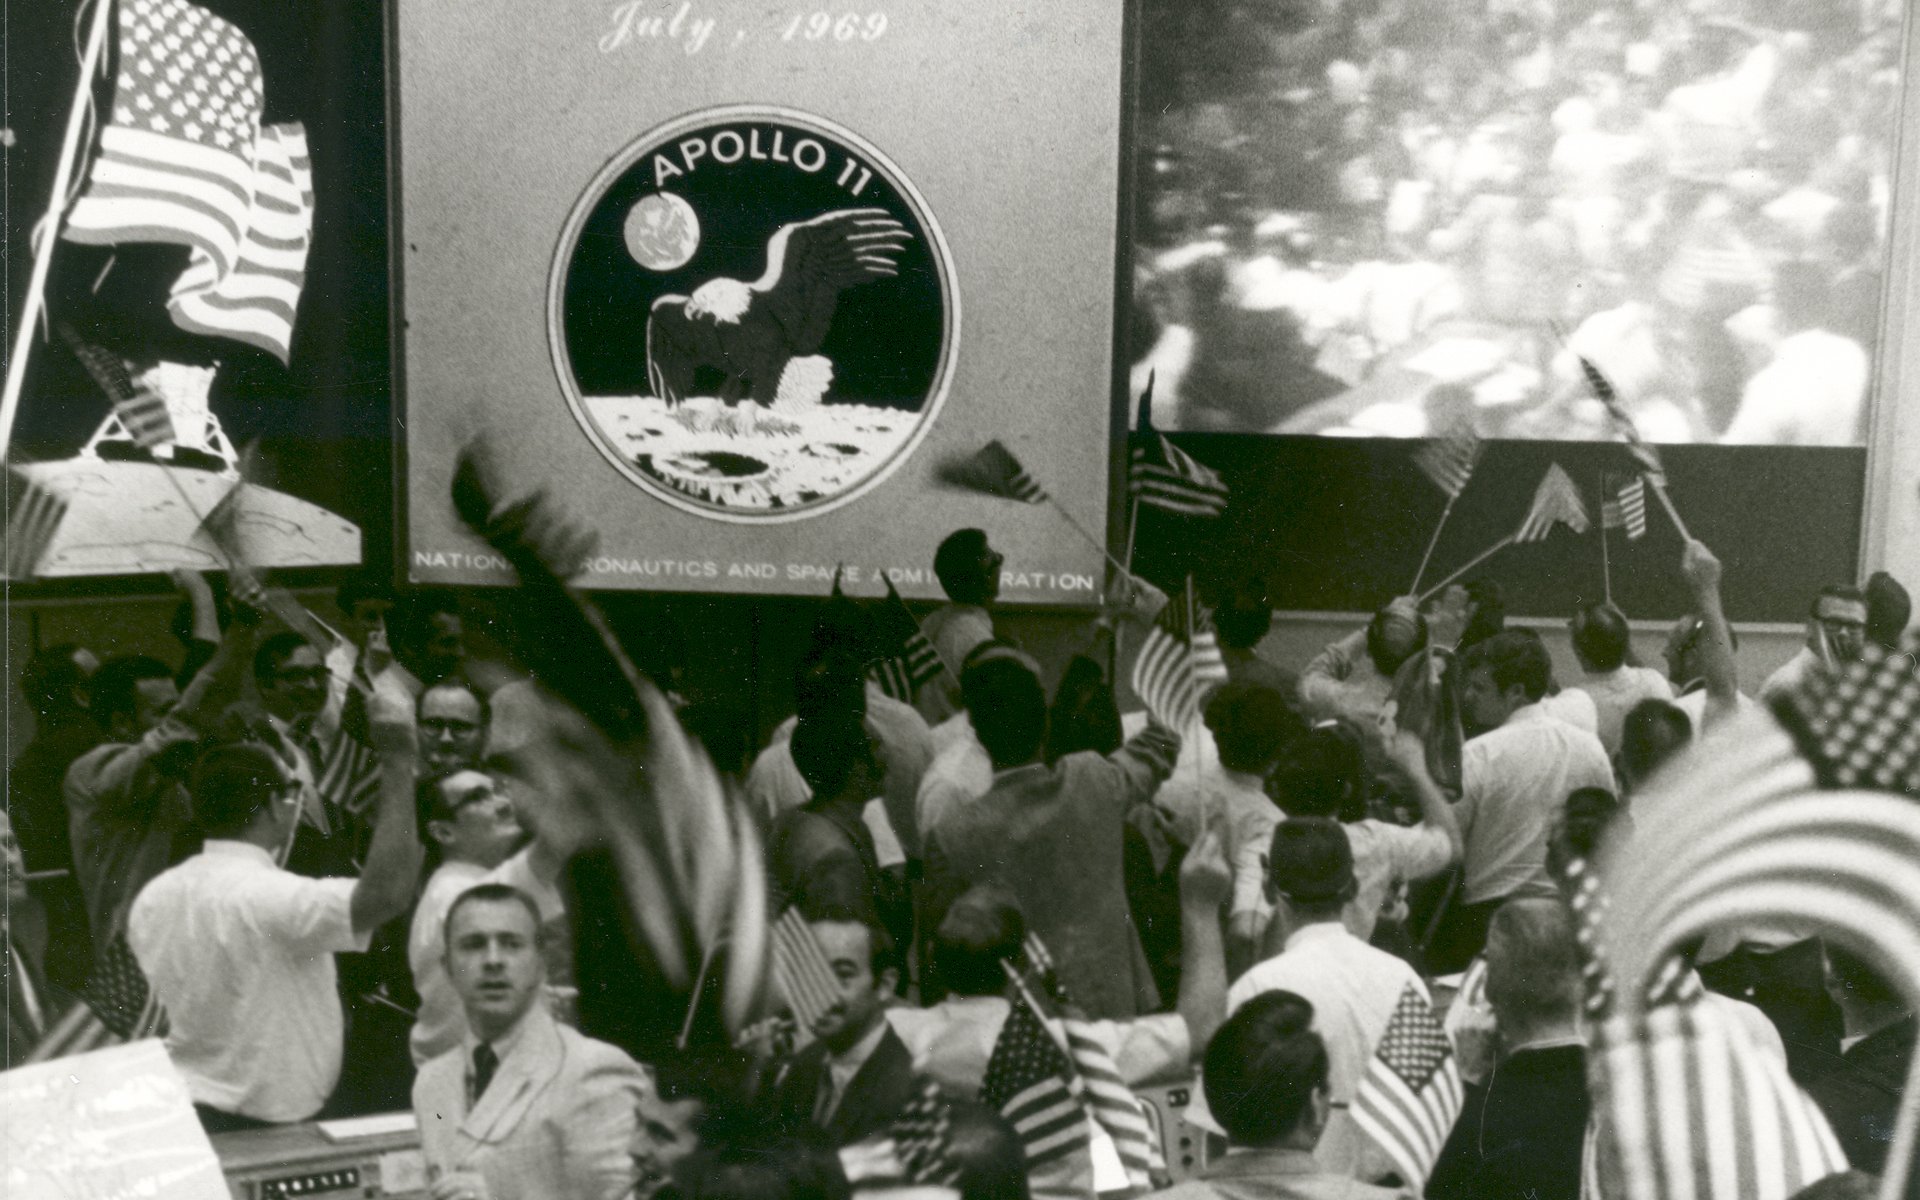 壁纸1920x1200One Giant Leap for Mankind  Mission Control Celebrates After Conclusion of the Apollo 11 Lunar 登月任务结束后的欢庆壁纸 阿波罗11号登月40周年纪念壁纸壁纸 阿波罗11号登月40周年纪念壁纸图片 阿波罗11号登月40周年纪念壁纸素材 人文壁纸 人文图库 人文图片素材桌面壁纸